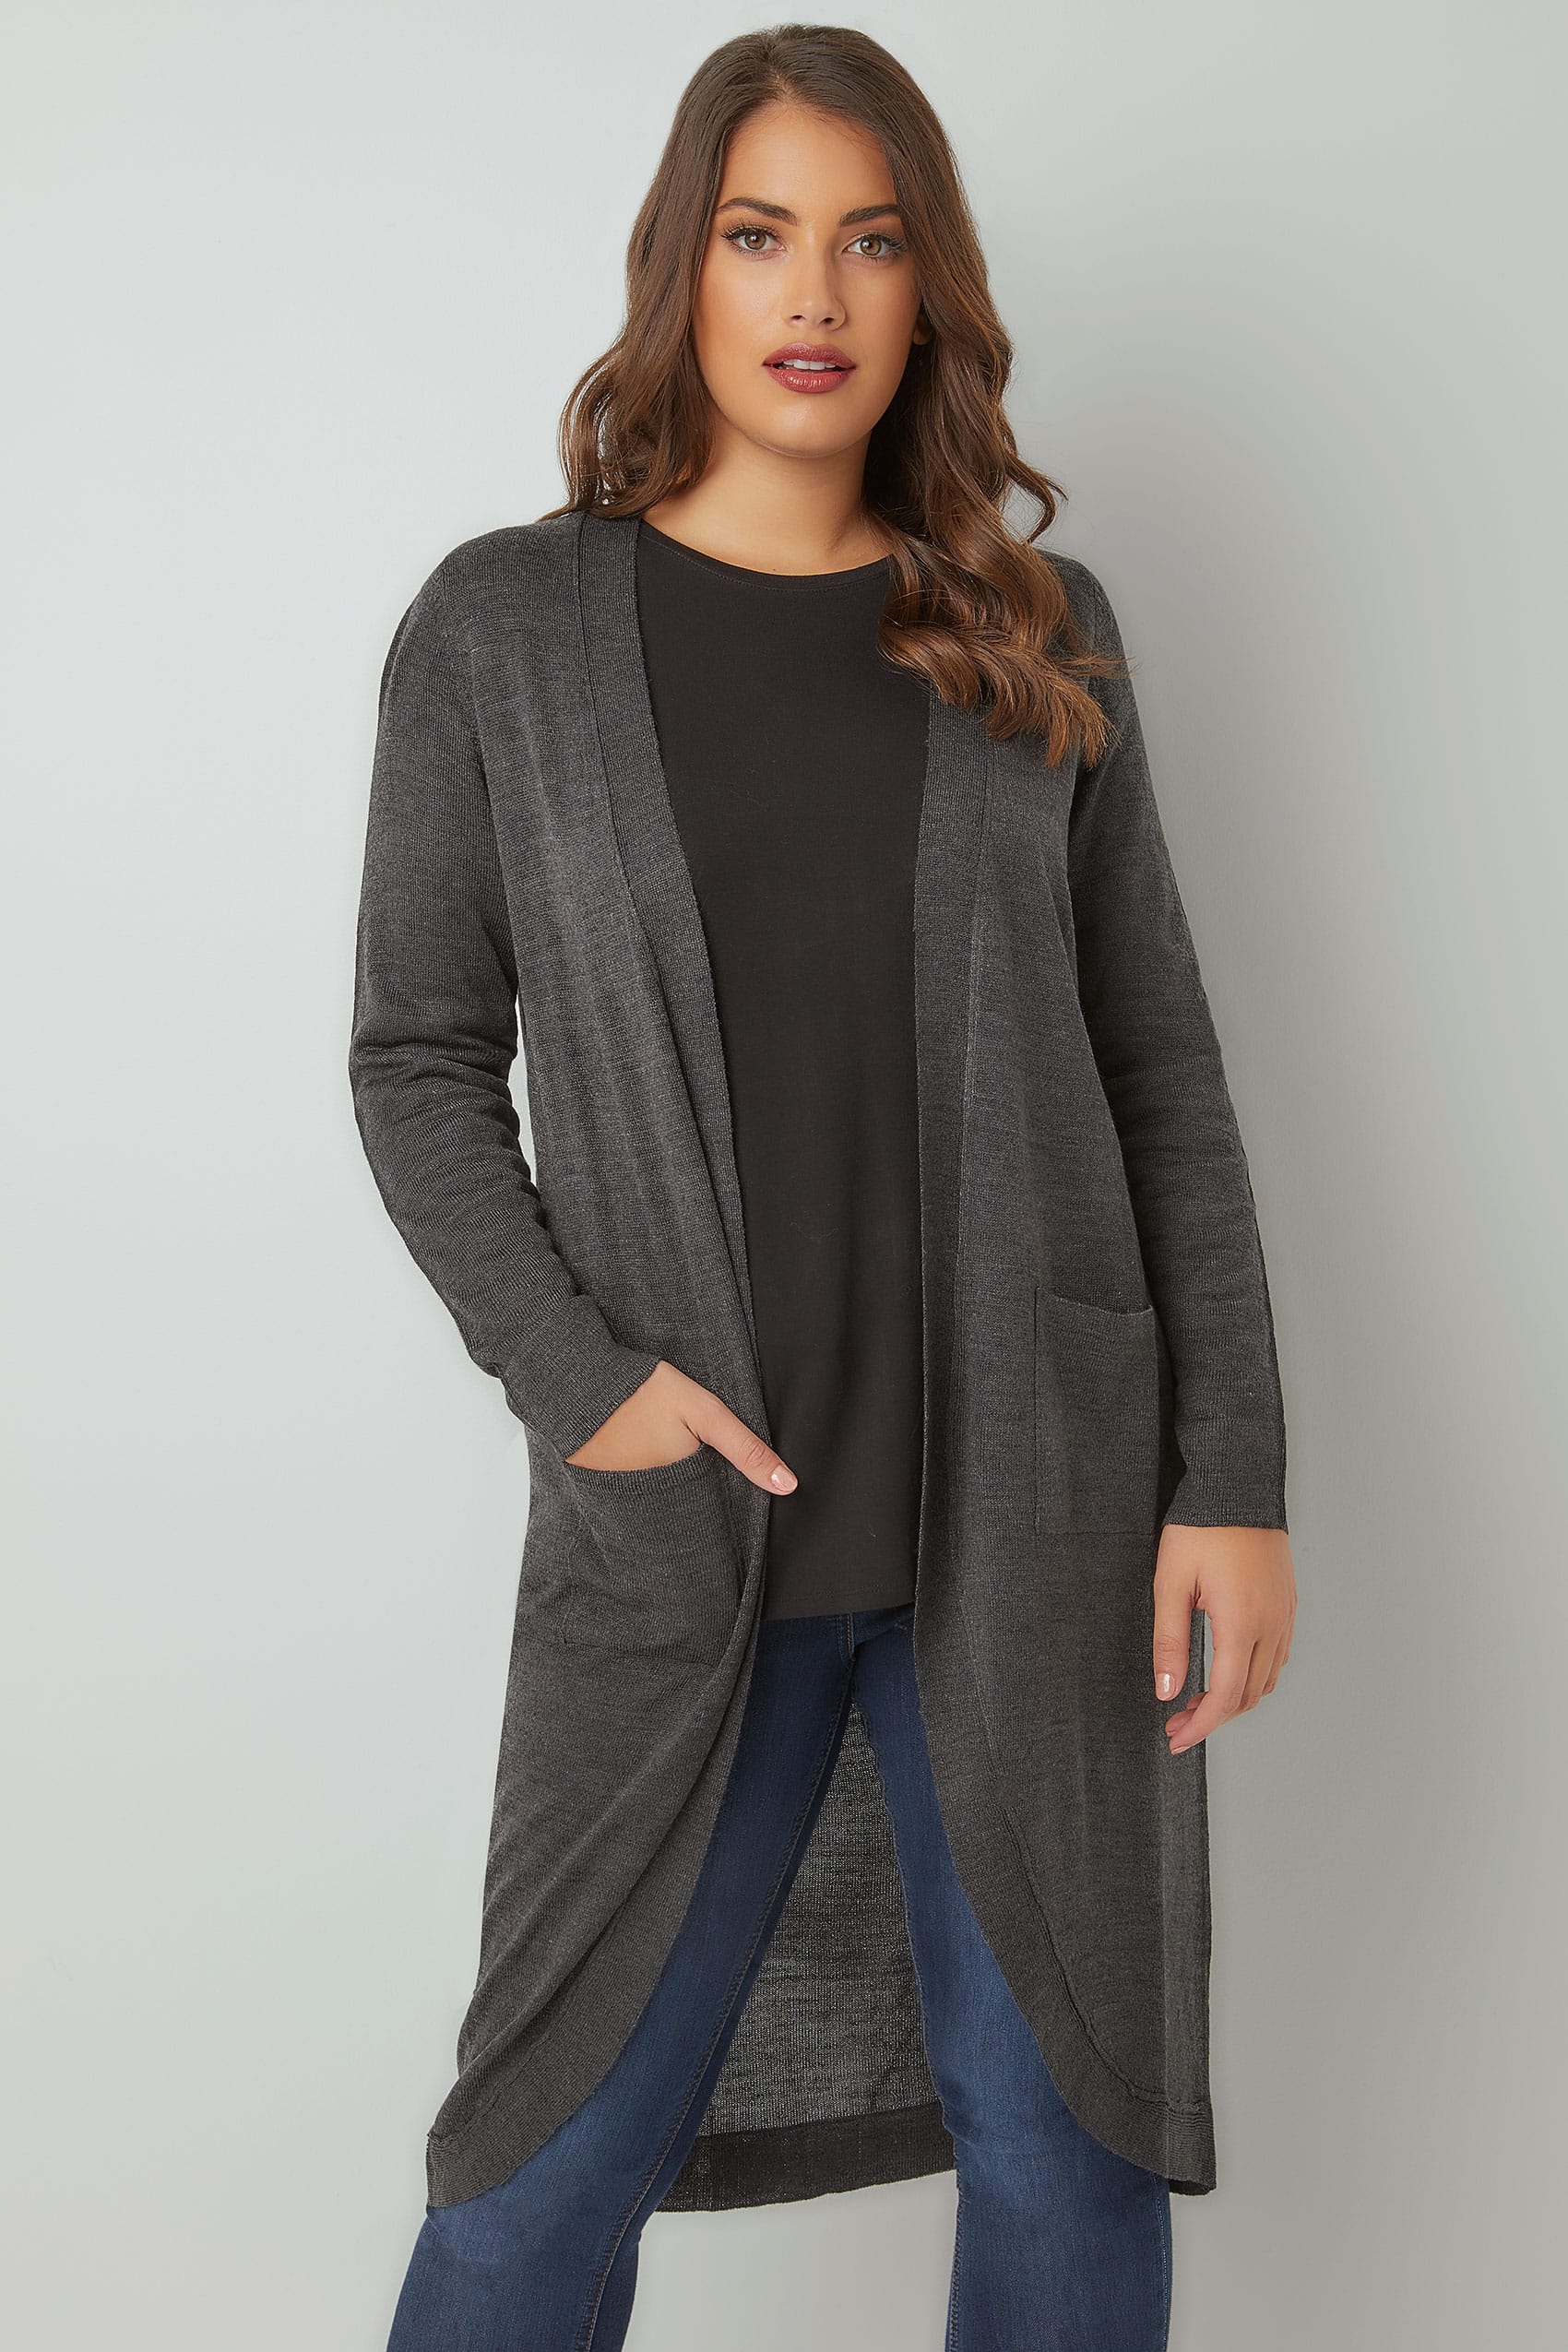 Dark grey cardigan long sweater pattern – Girls clipart, current